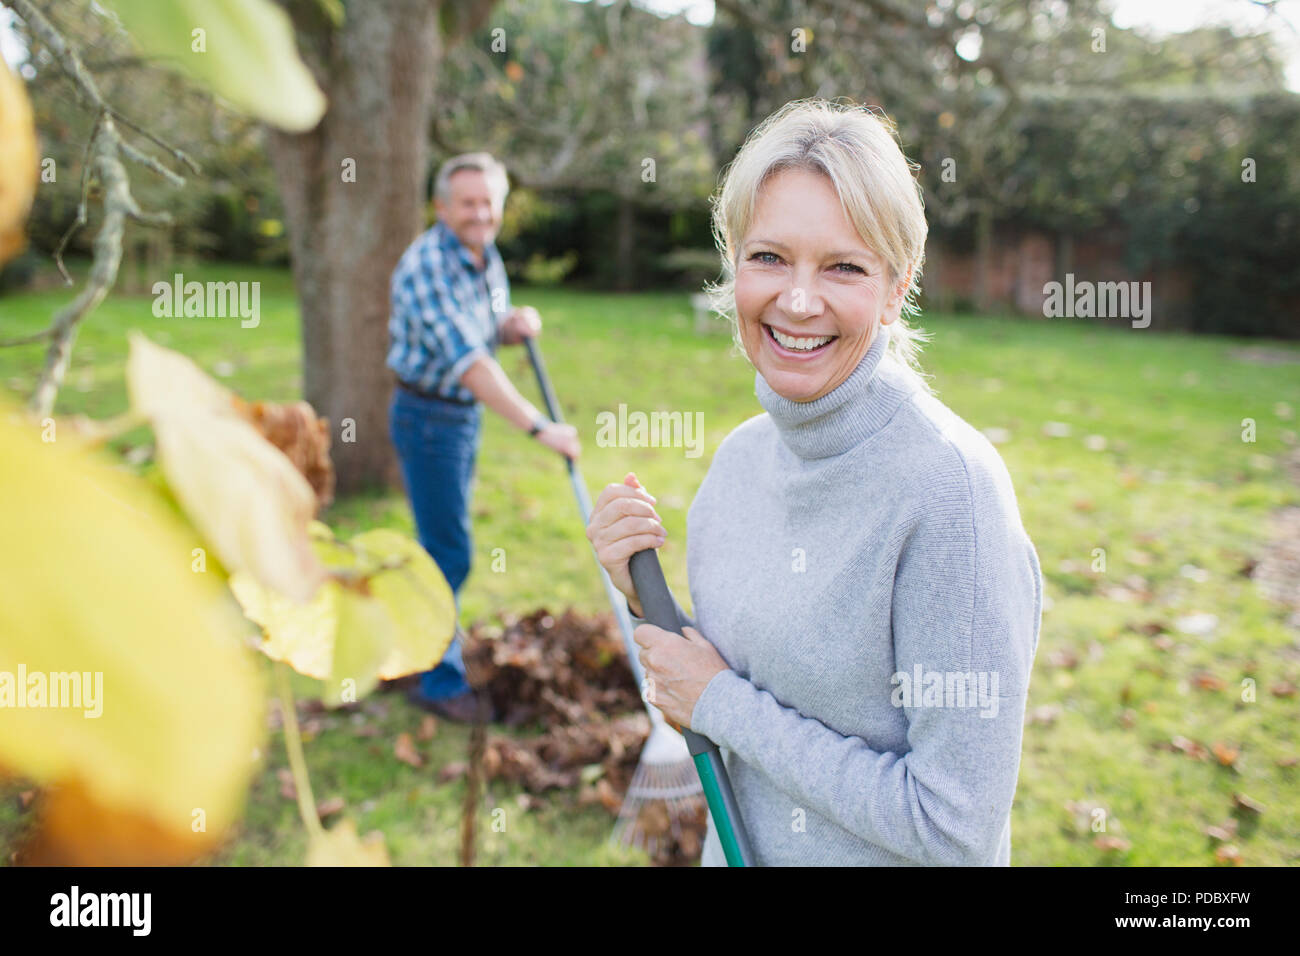 Portrait smiling, confident mature woman raking autumn leaves in backyard Stock Photo